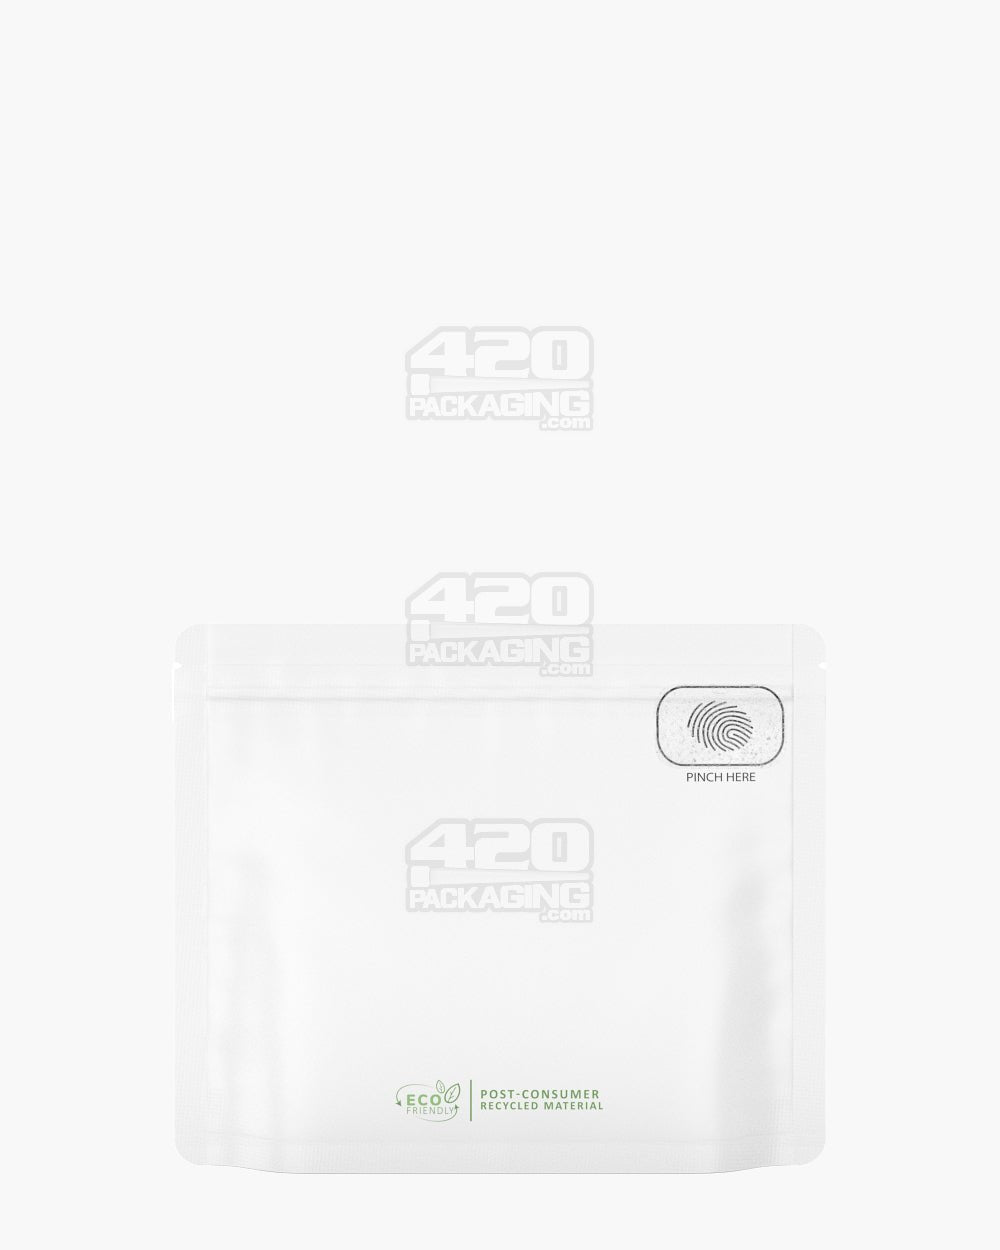 Matte-White 8" x 6.7" PCR Mylar Pinch N Slide 3.0 Child Resistant & Tamper Evident Exit Bags (28 grams) 250/Box - 2